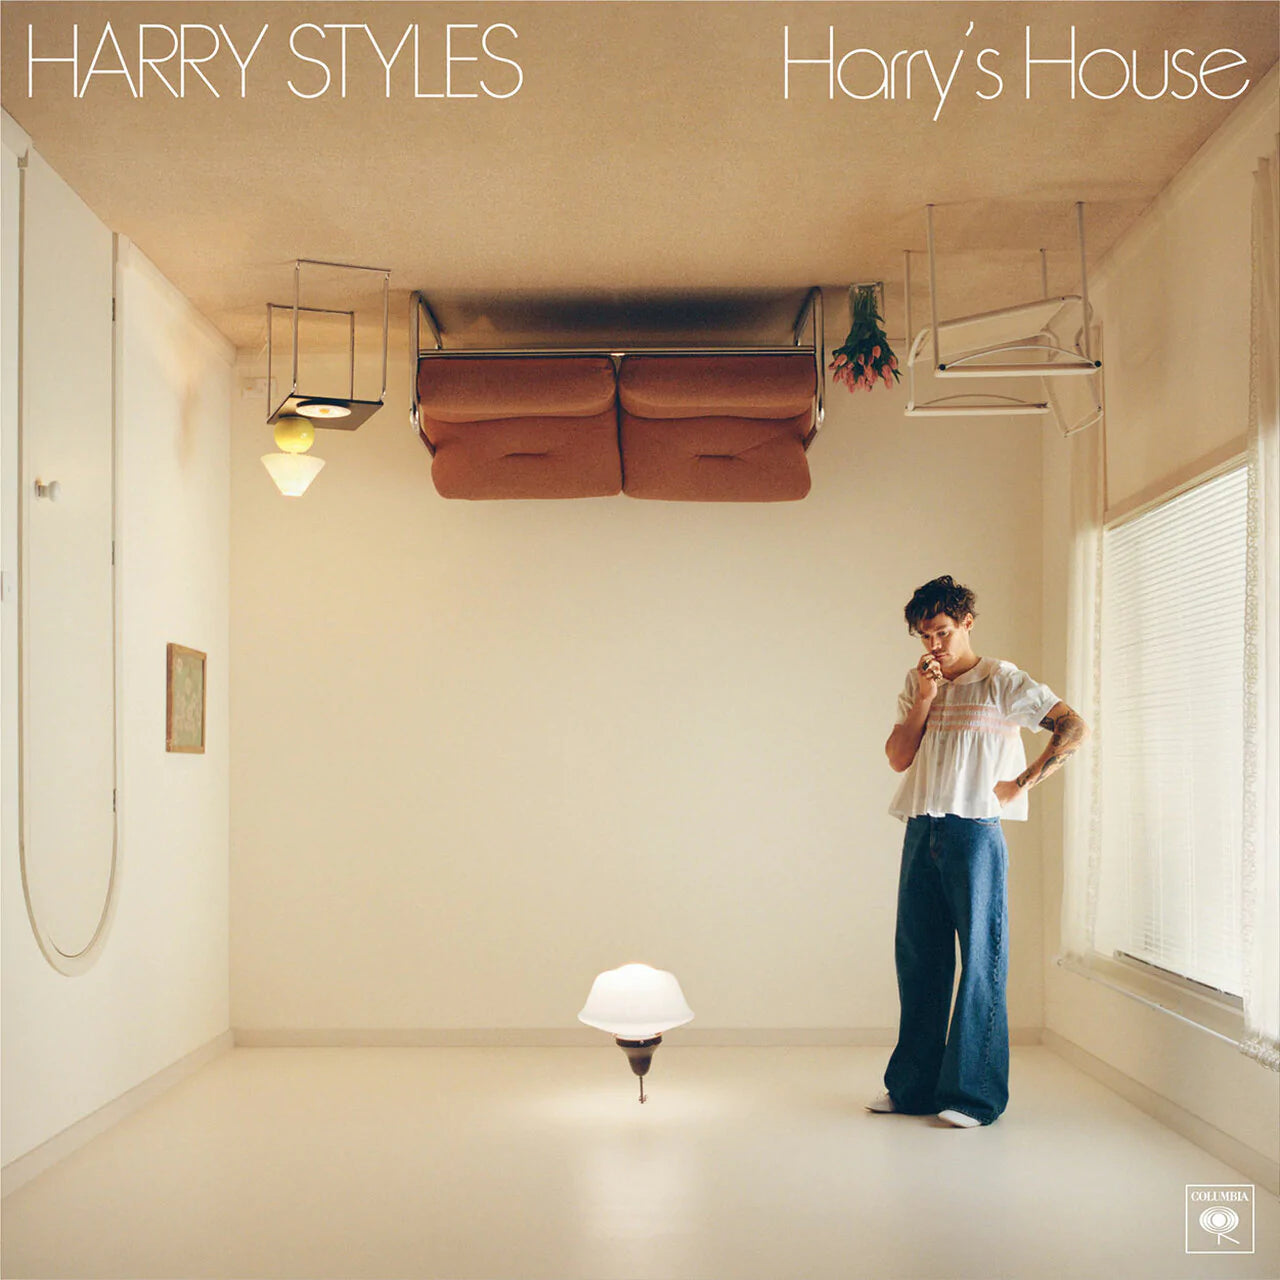 Harry Styles "Harry's House" 12" Vinyl